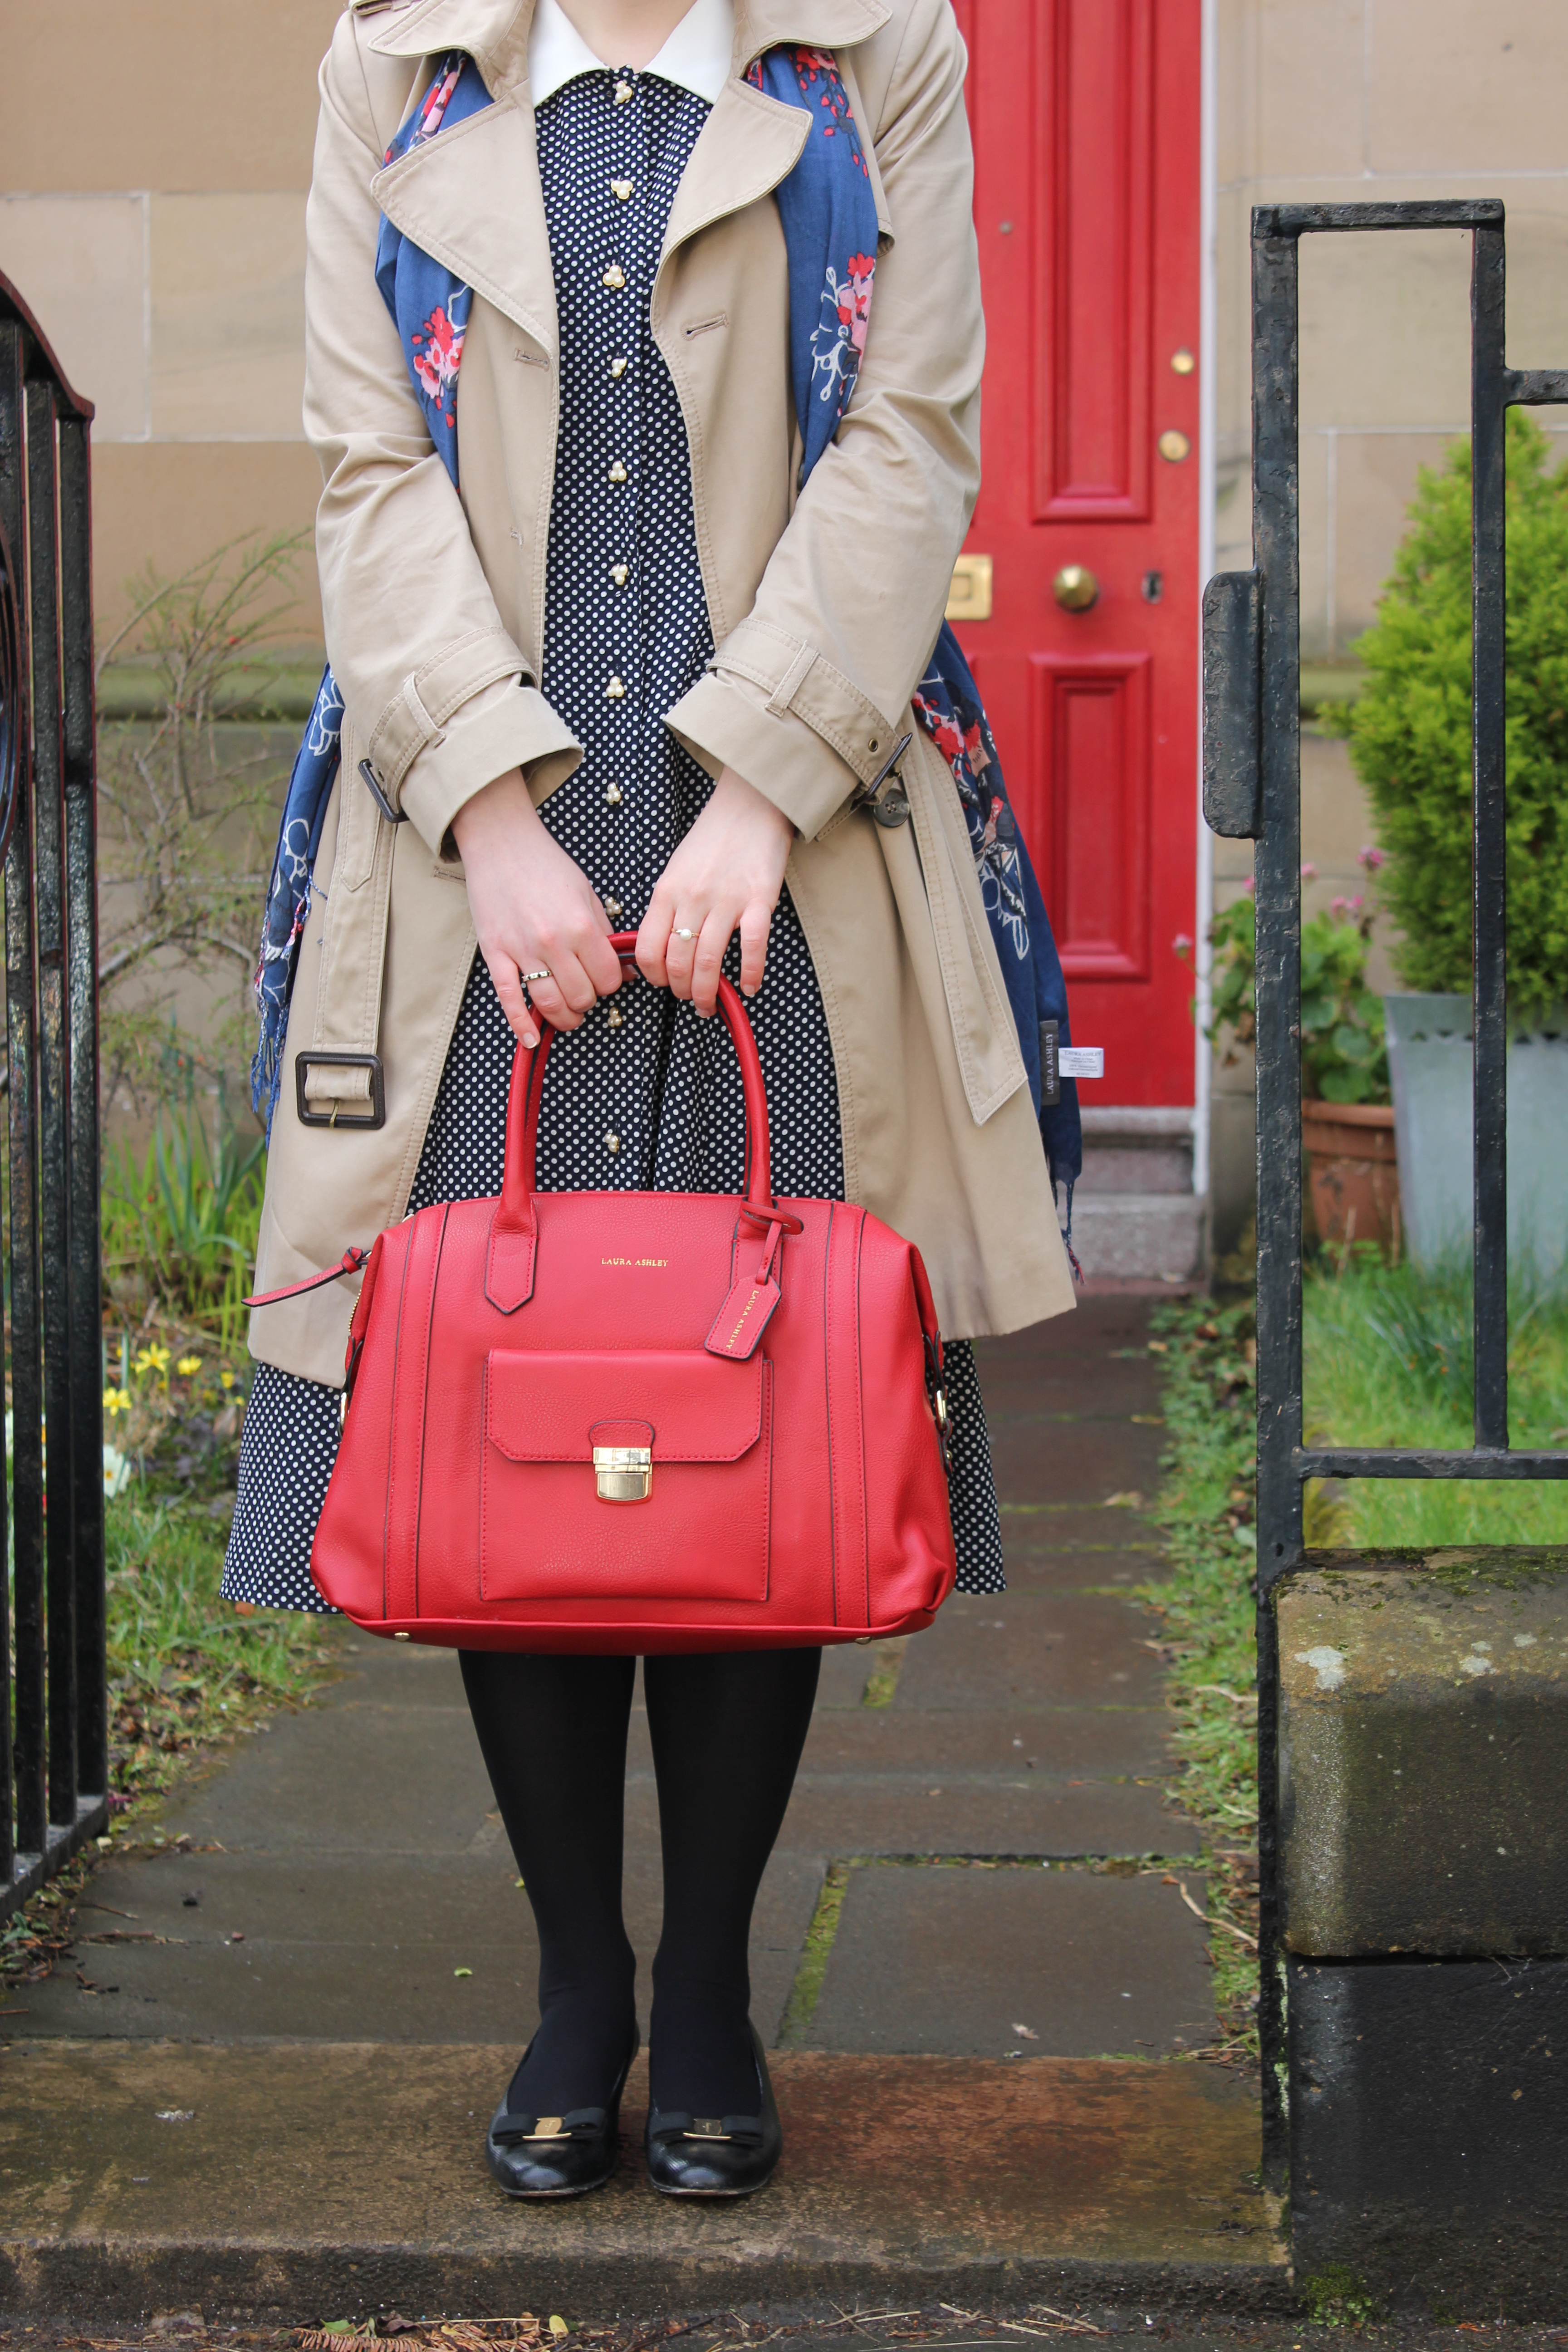 Red Laura Ashley handbag